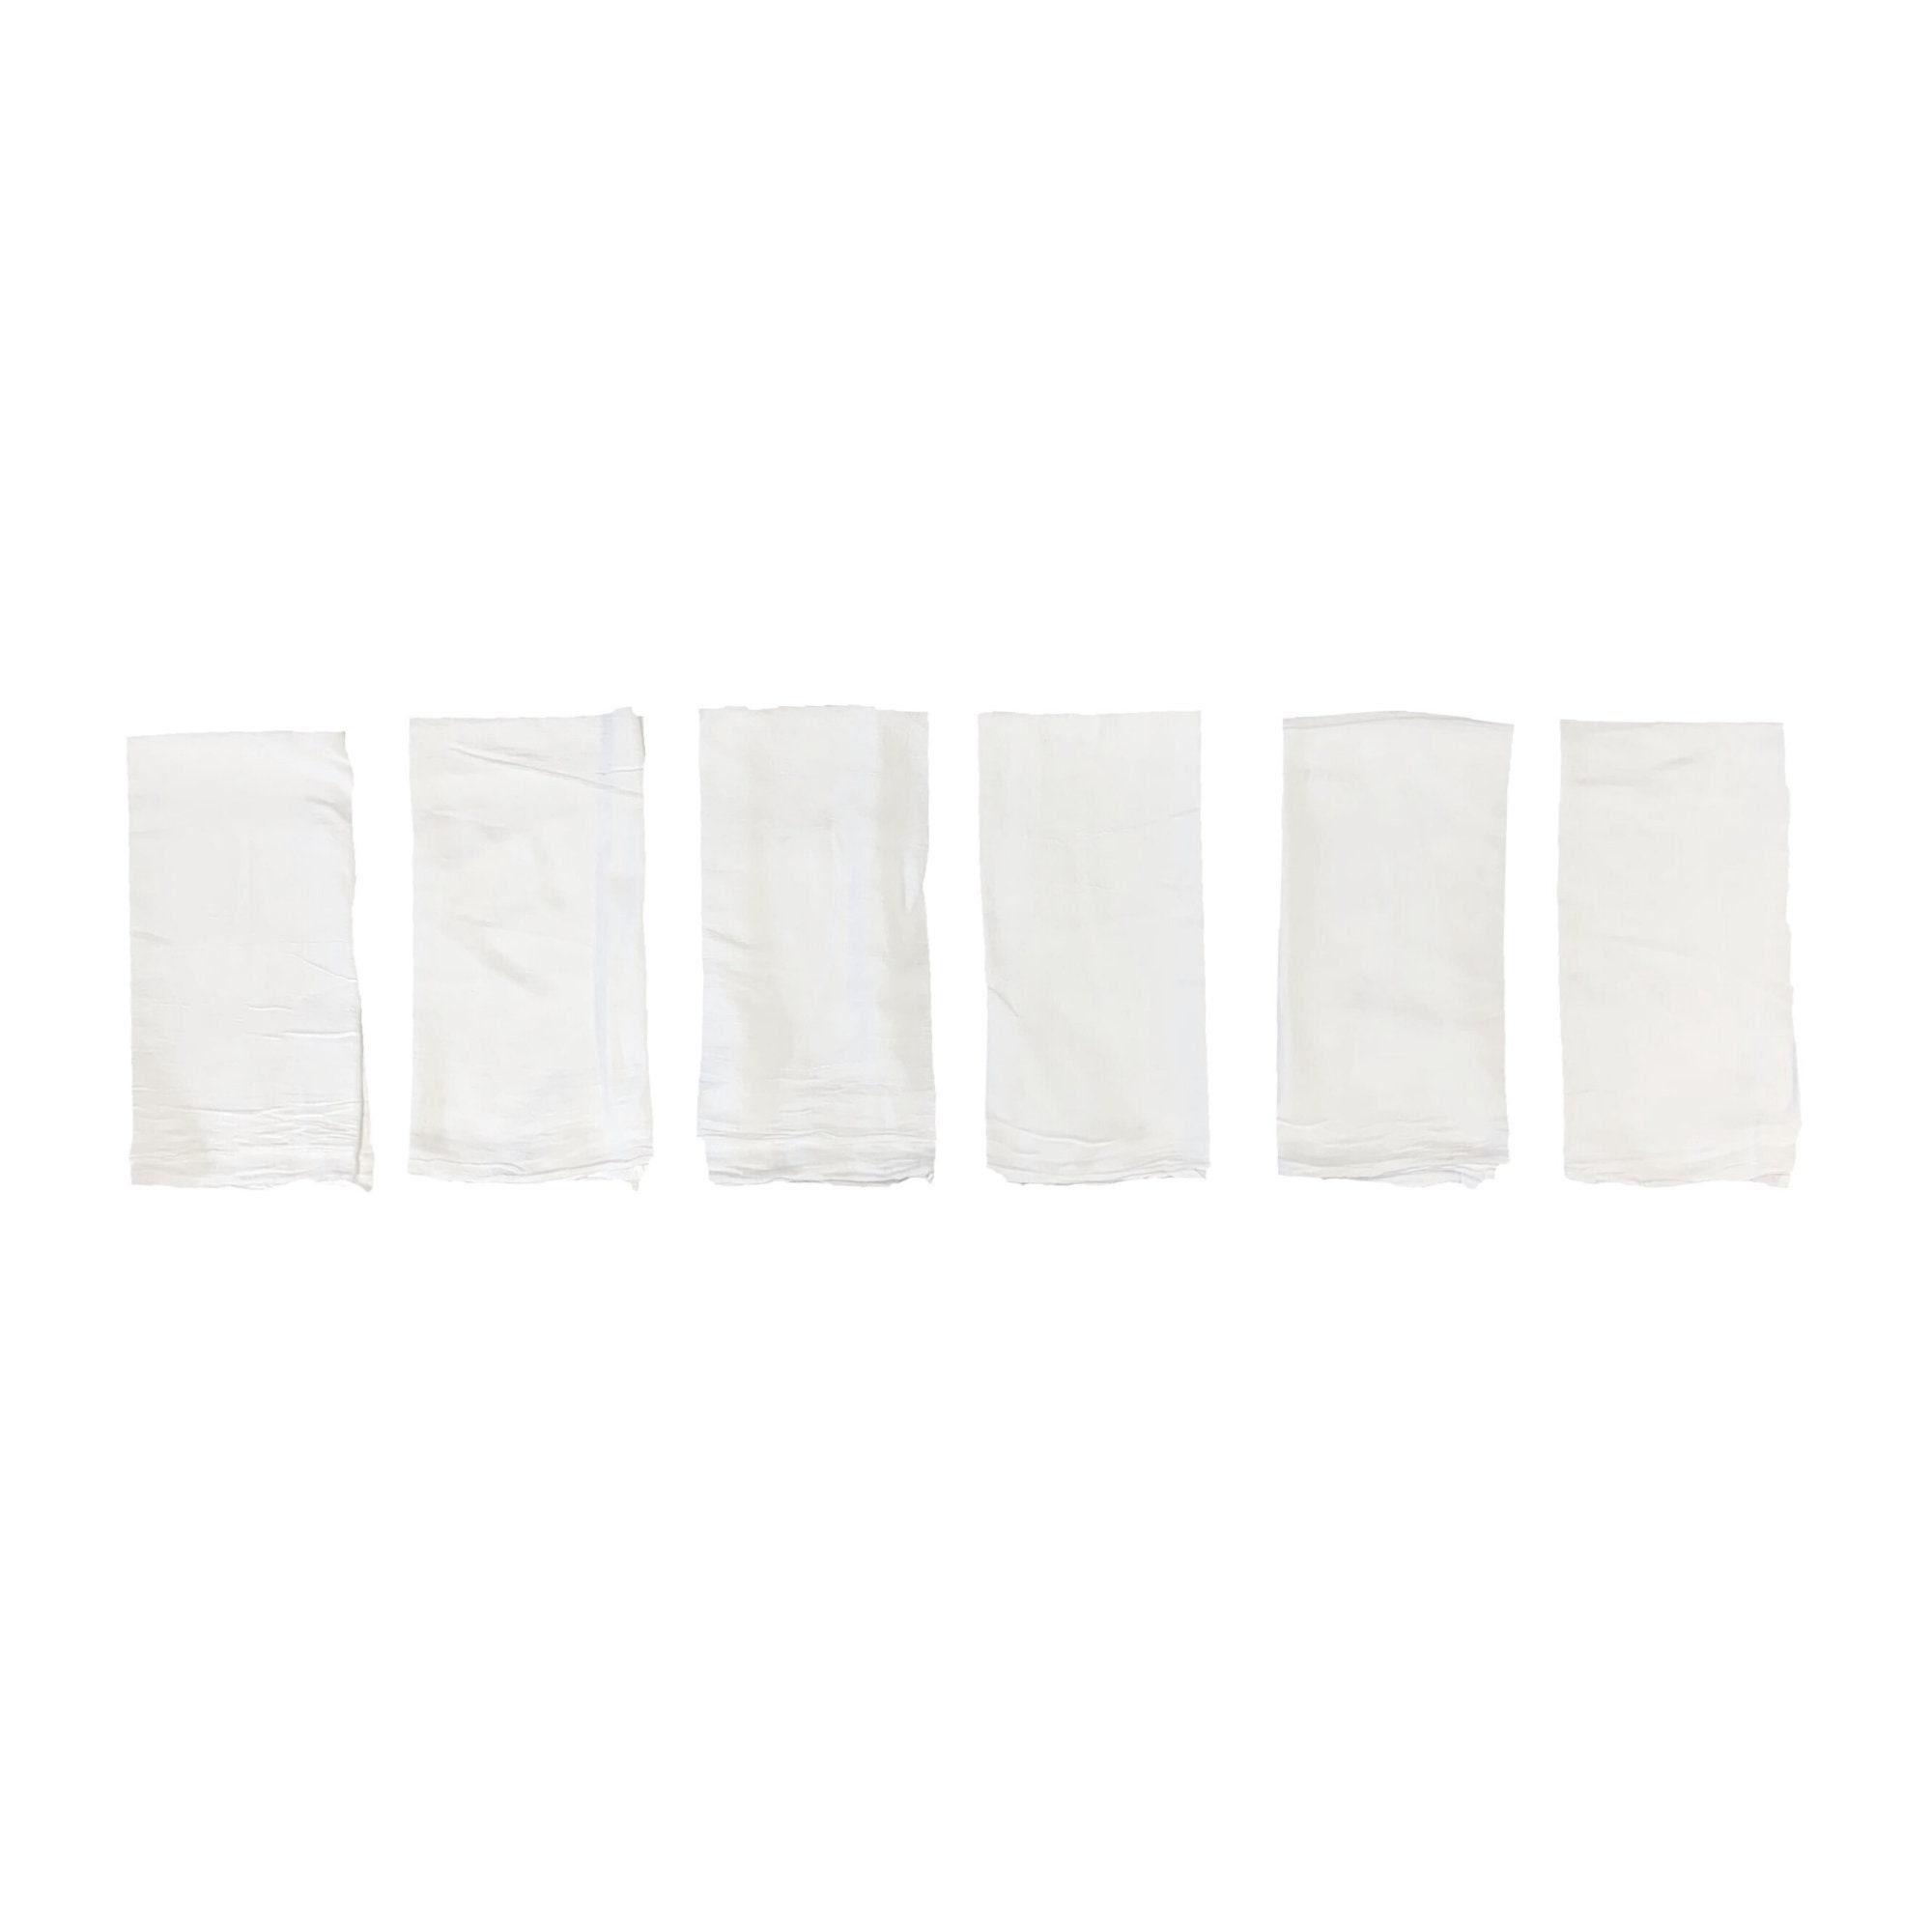 Wholesale White Tea Towels in Bulk (19x 27)